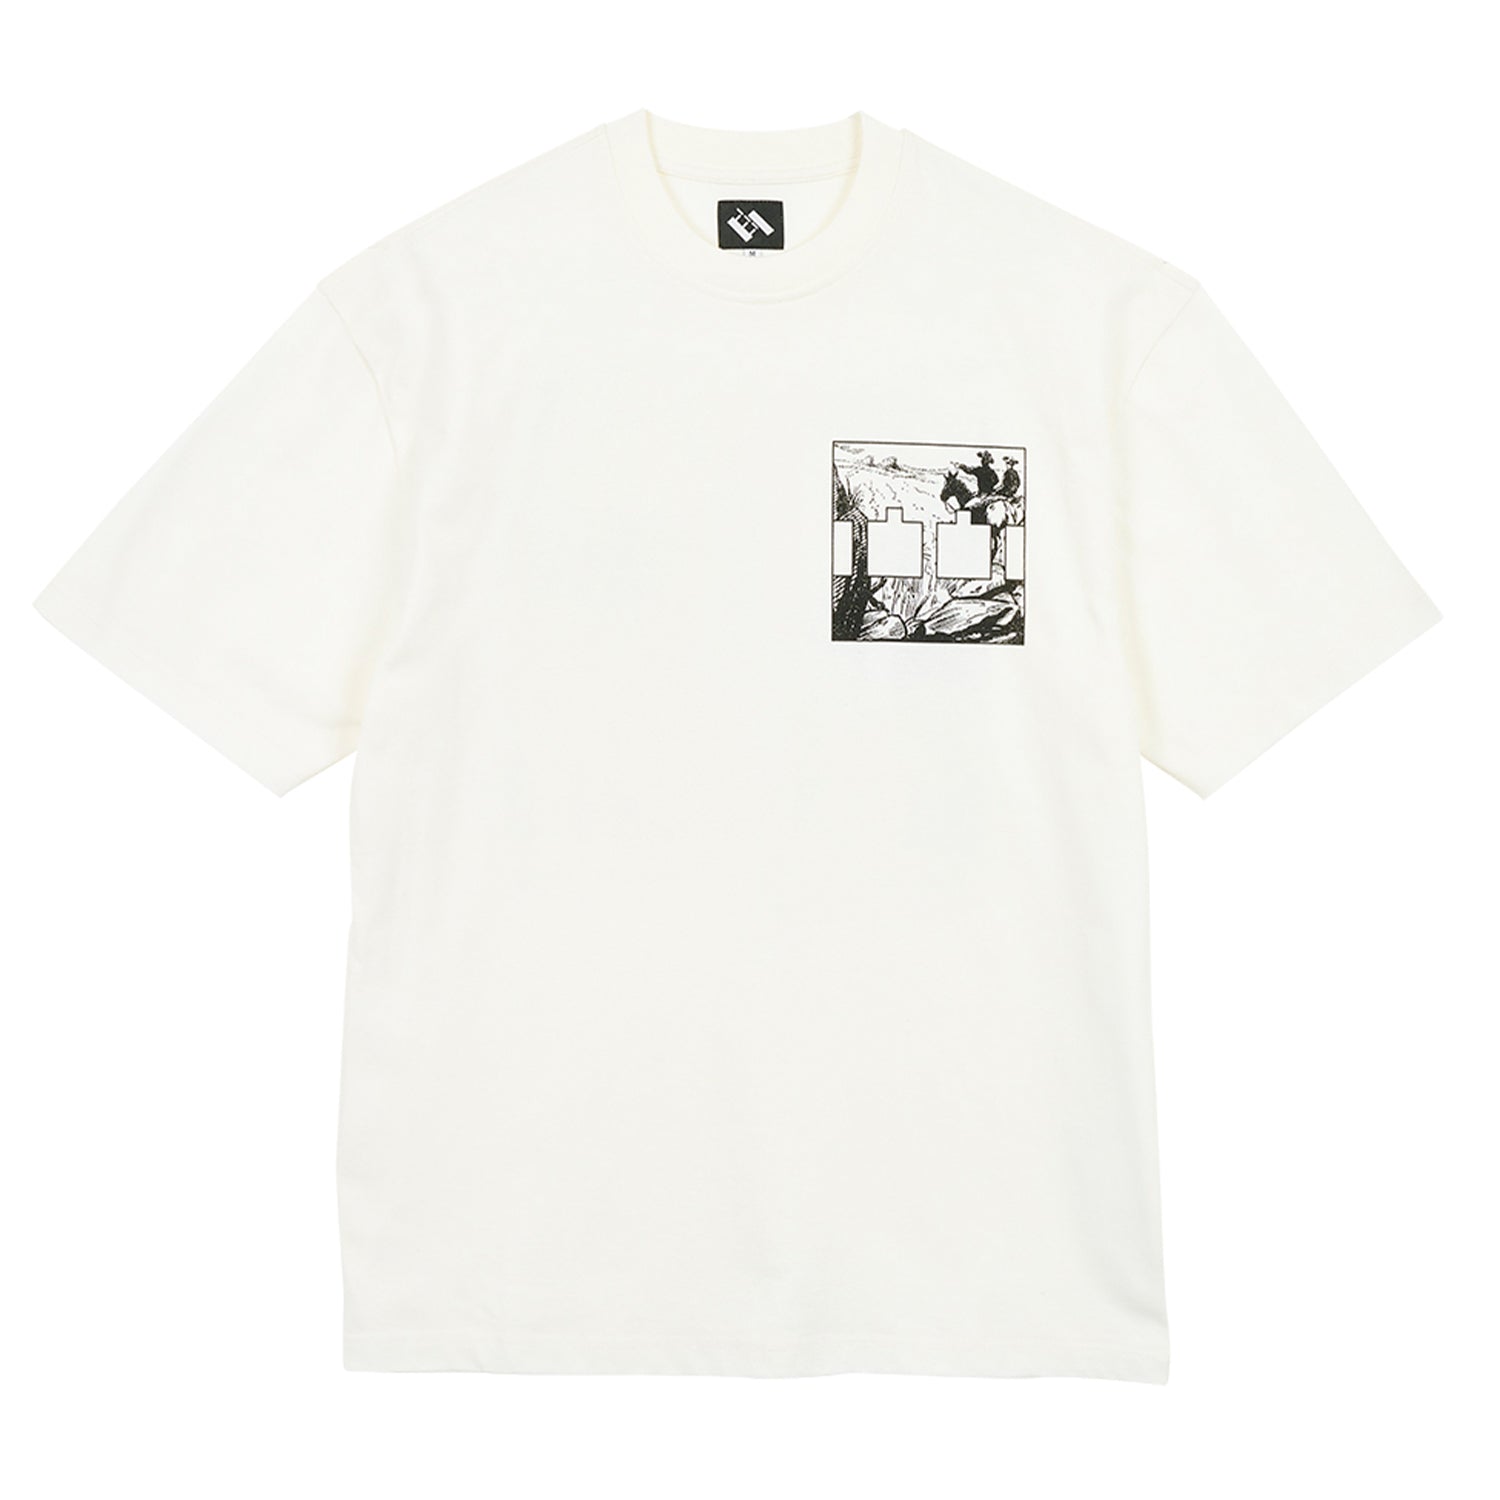 Two Dark Humps T-Shirt (White)